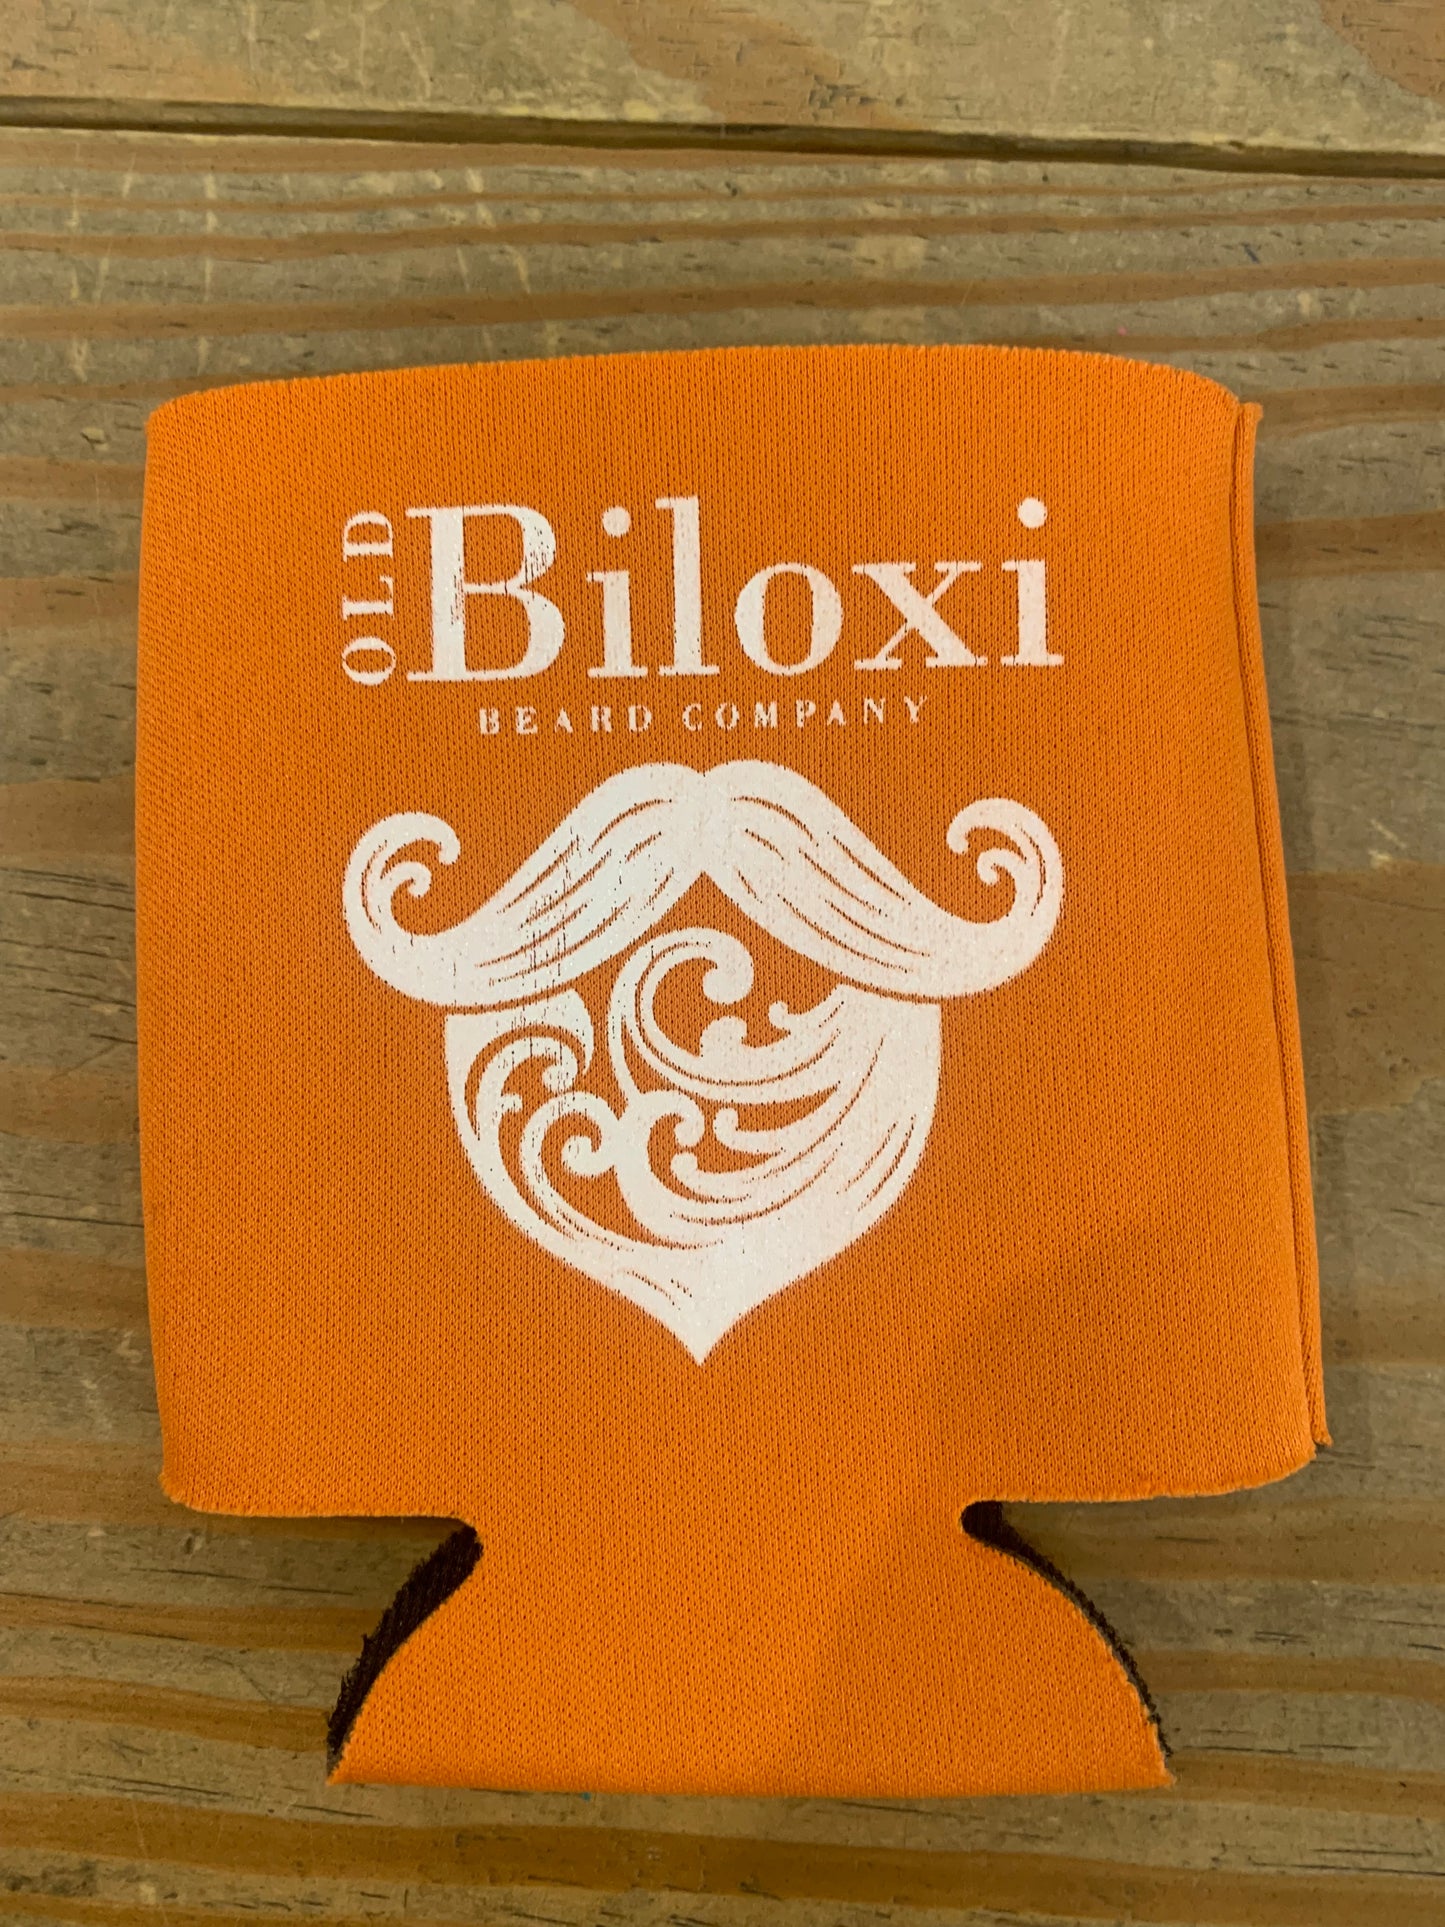 Old Biloxi Beard Company Koozie